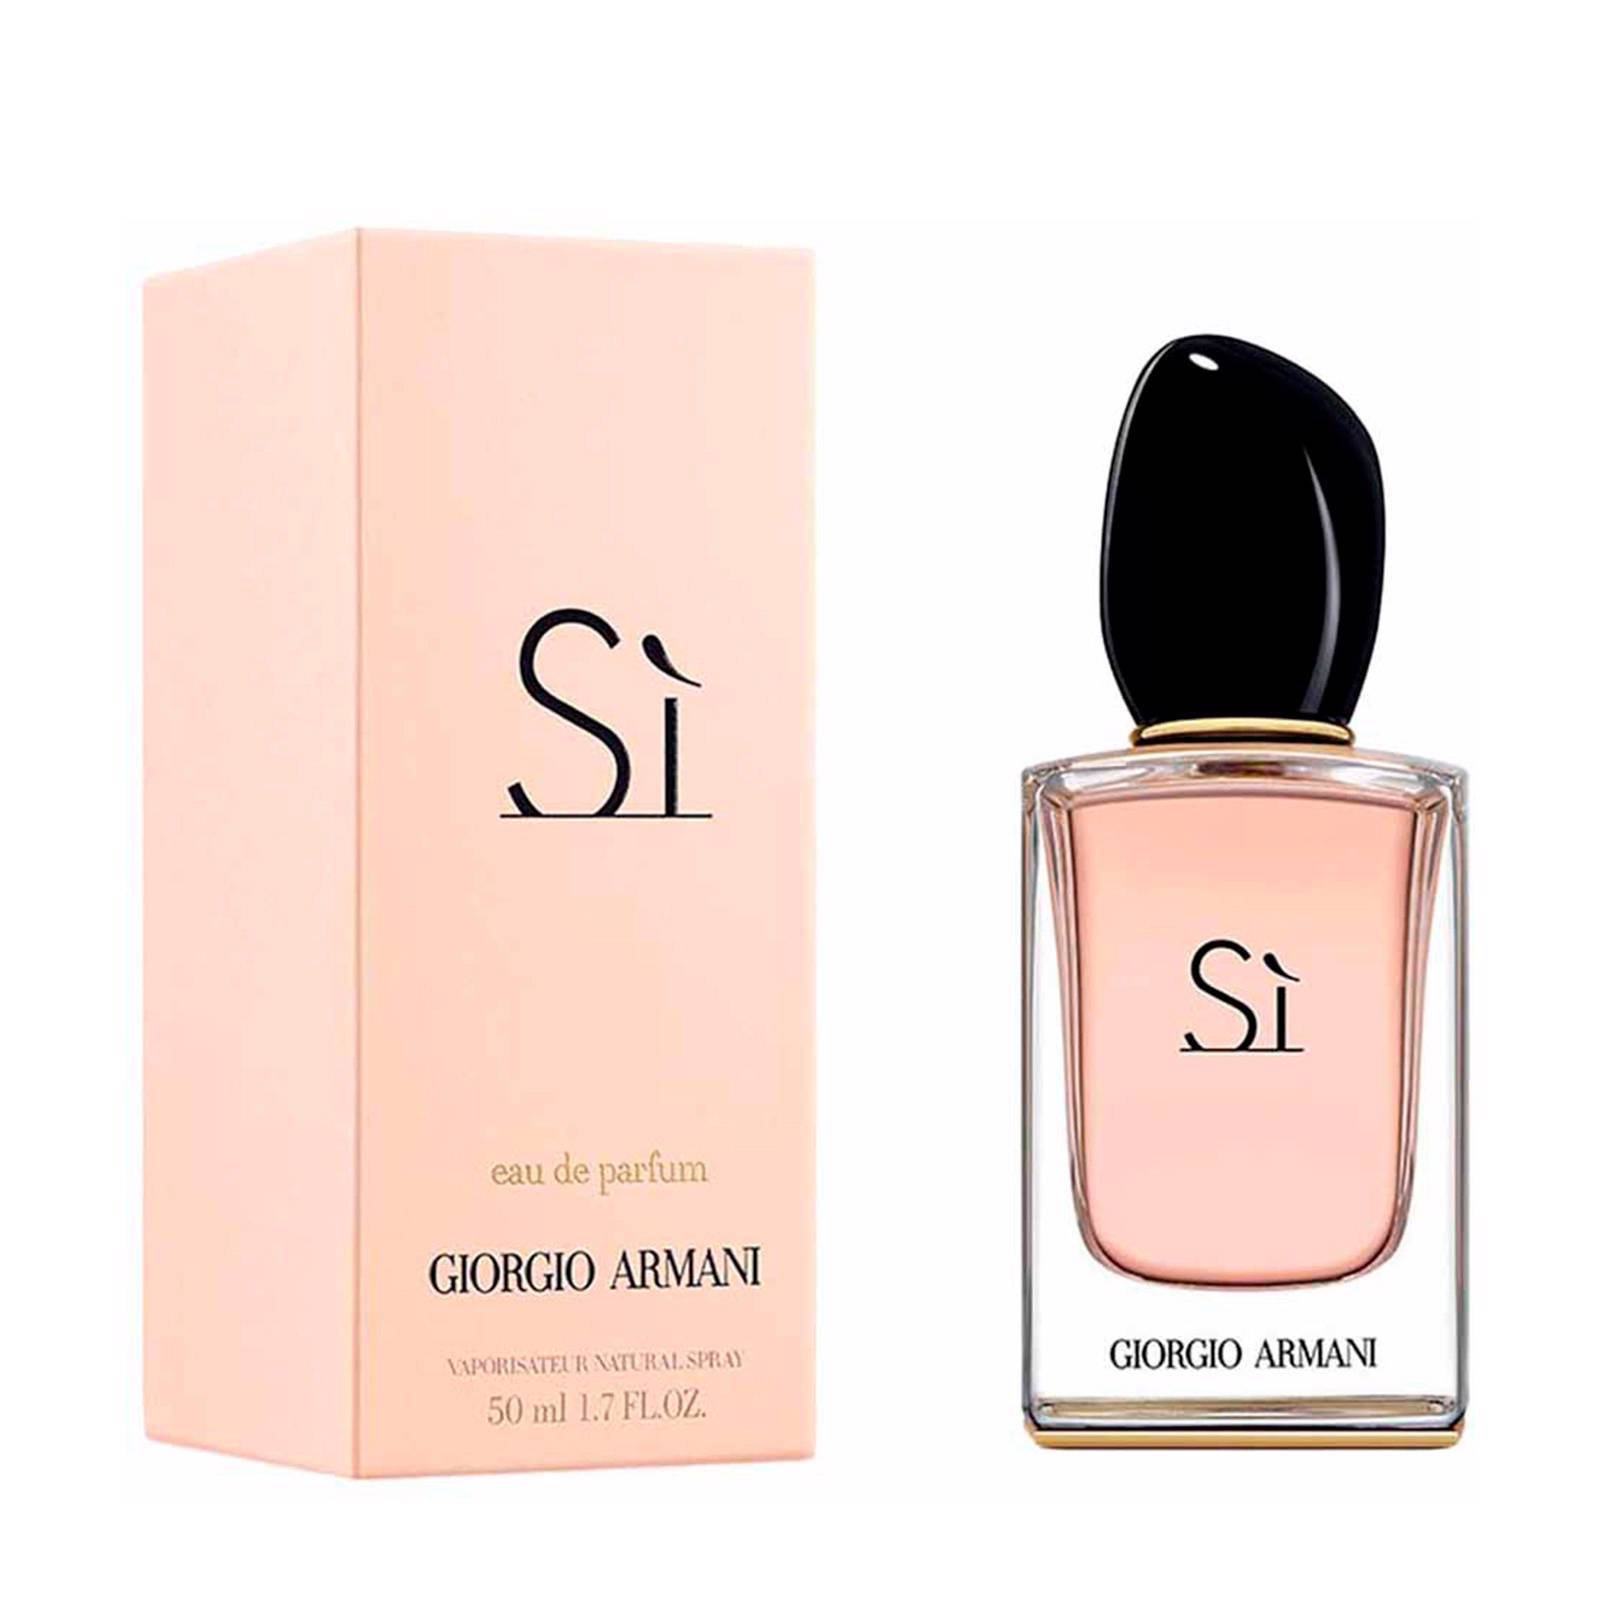 Giorgio Armani Si eau de parfum - 50 ml 